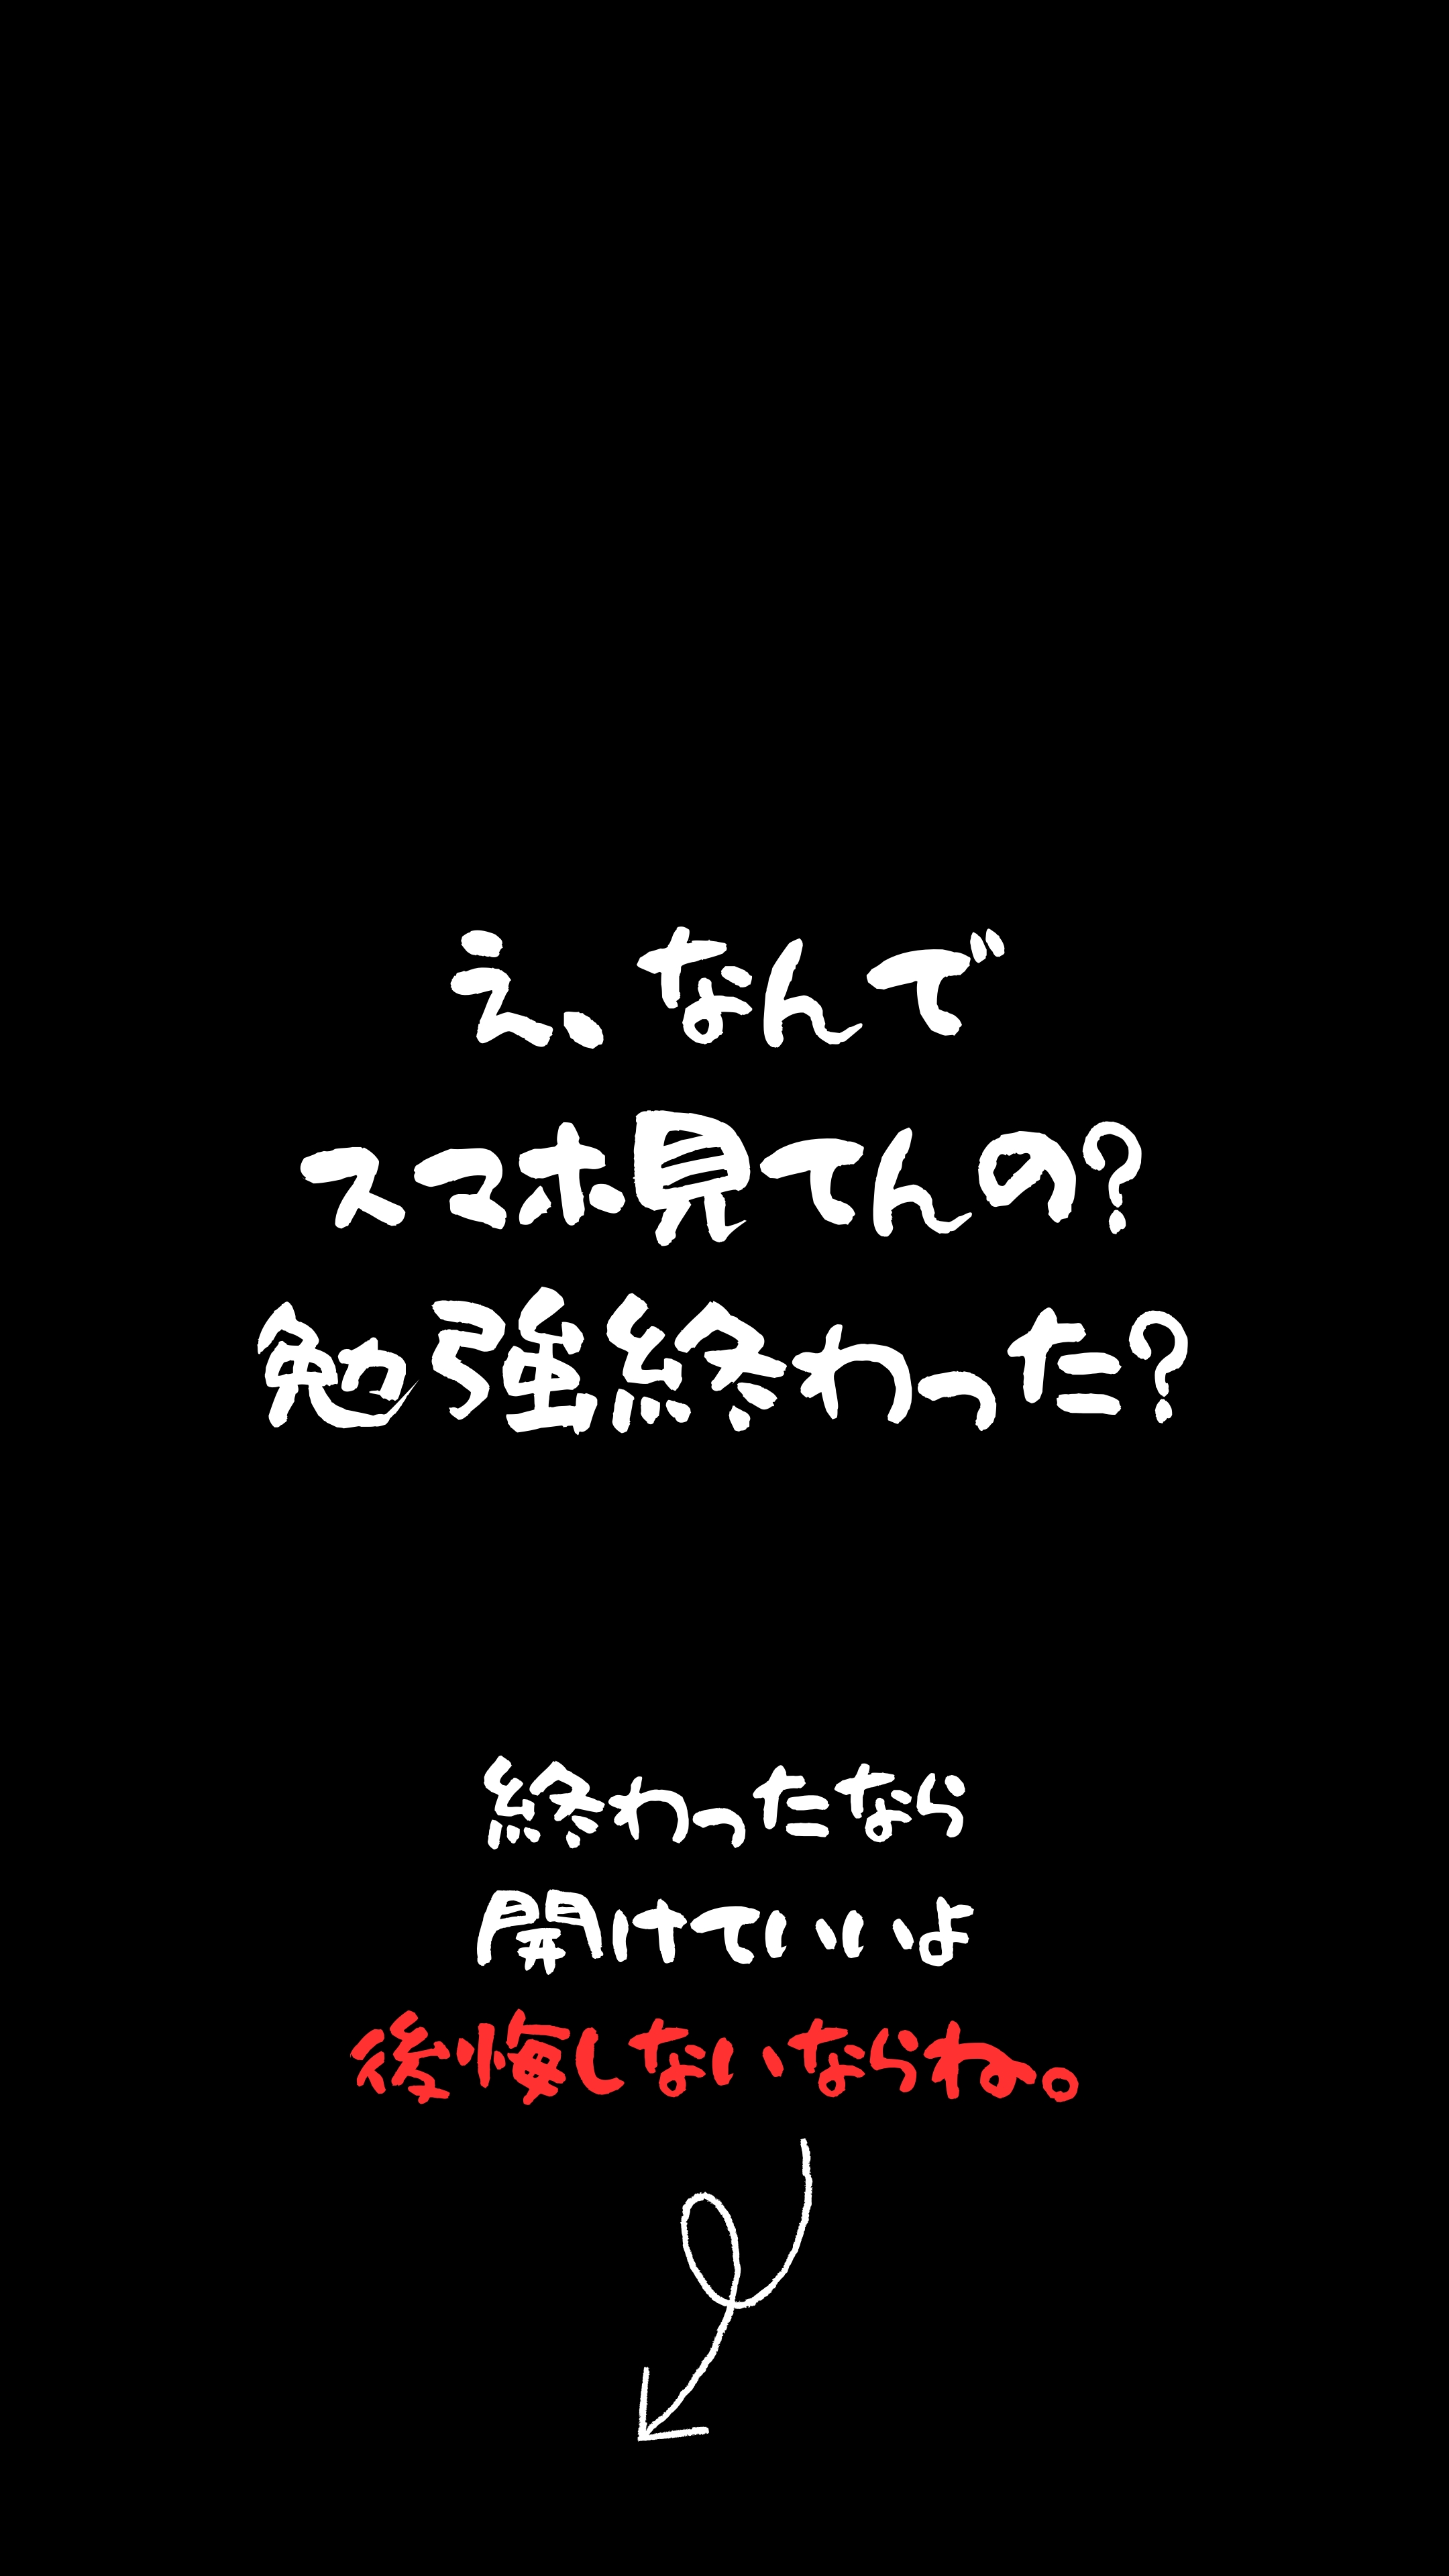 Mysterious Handwritten Japanese Question on Black Дэлгэцийн зураг[5ae7481a6d774cc0a166]